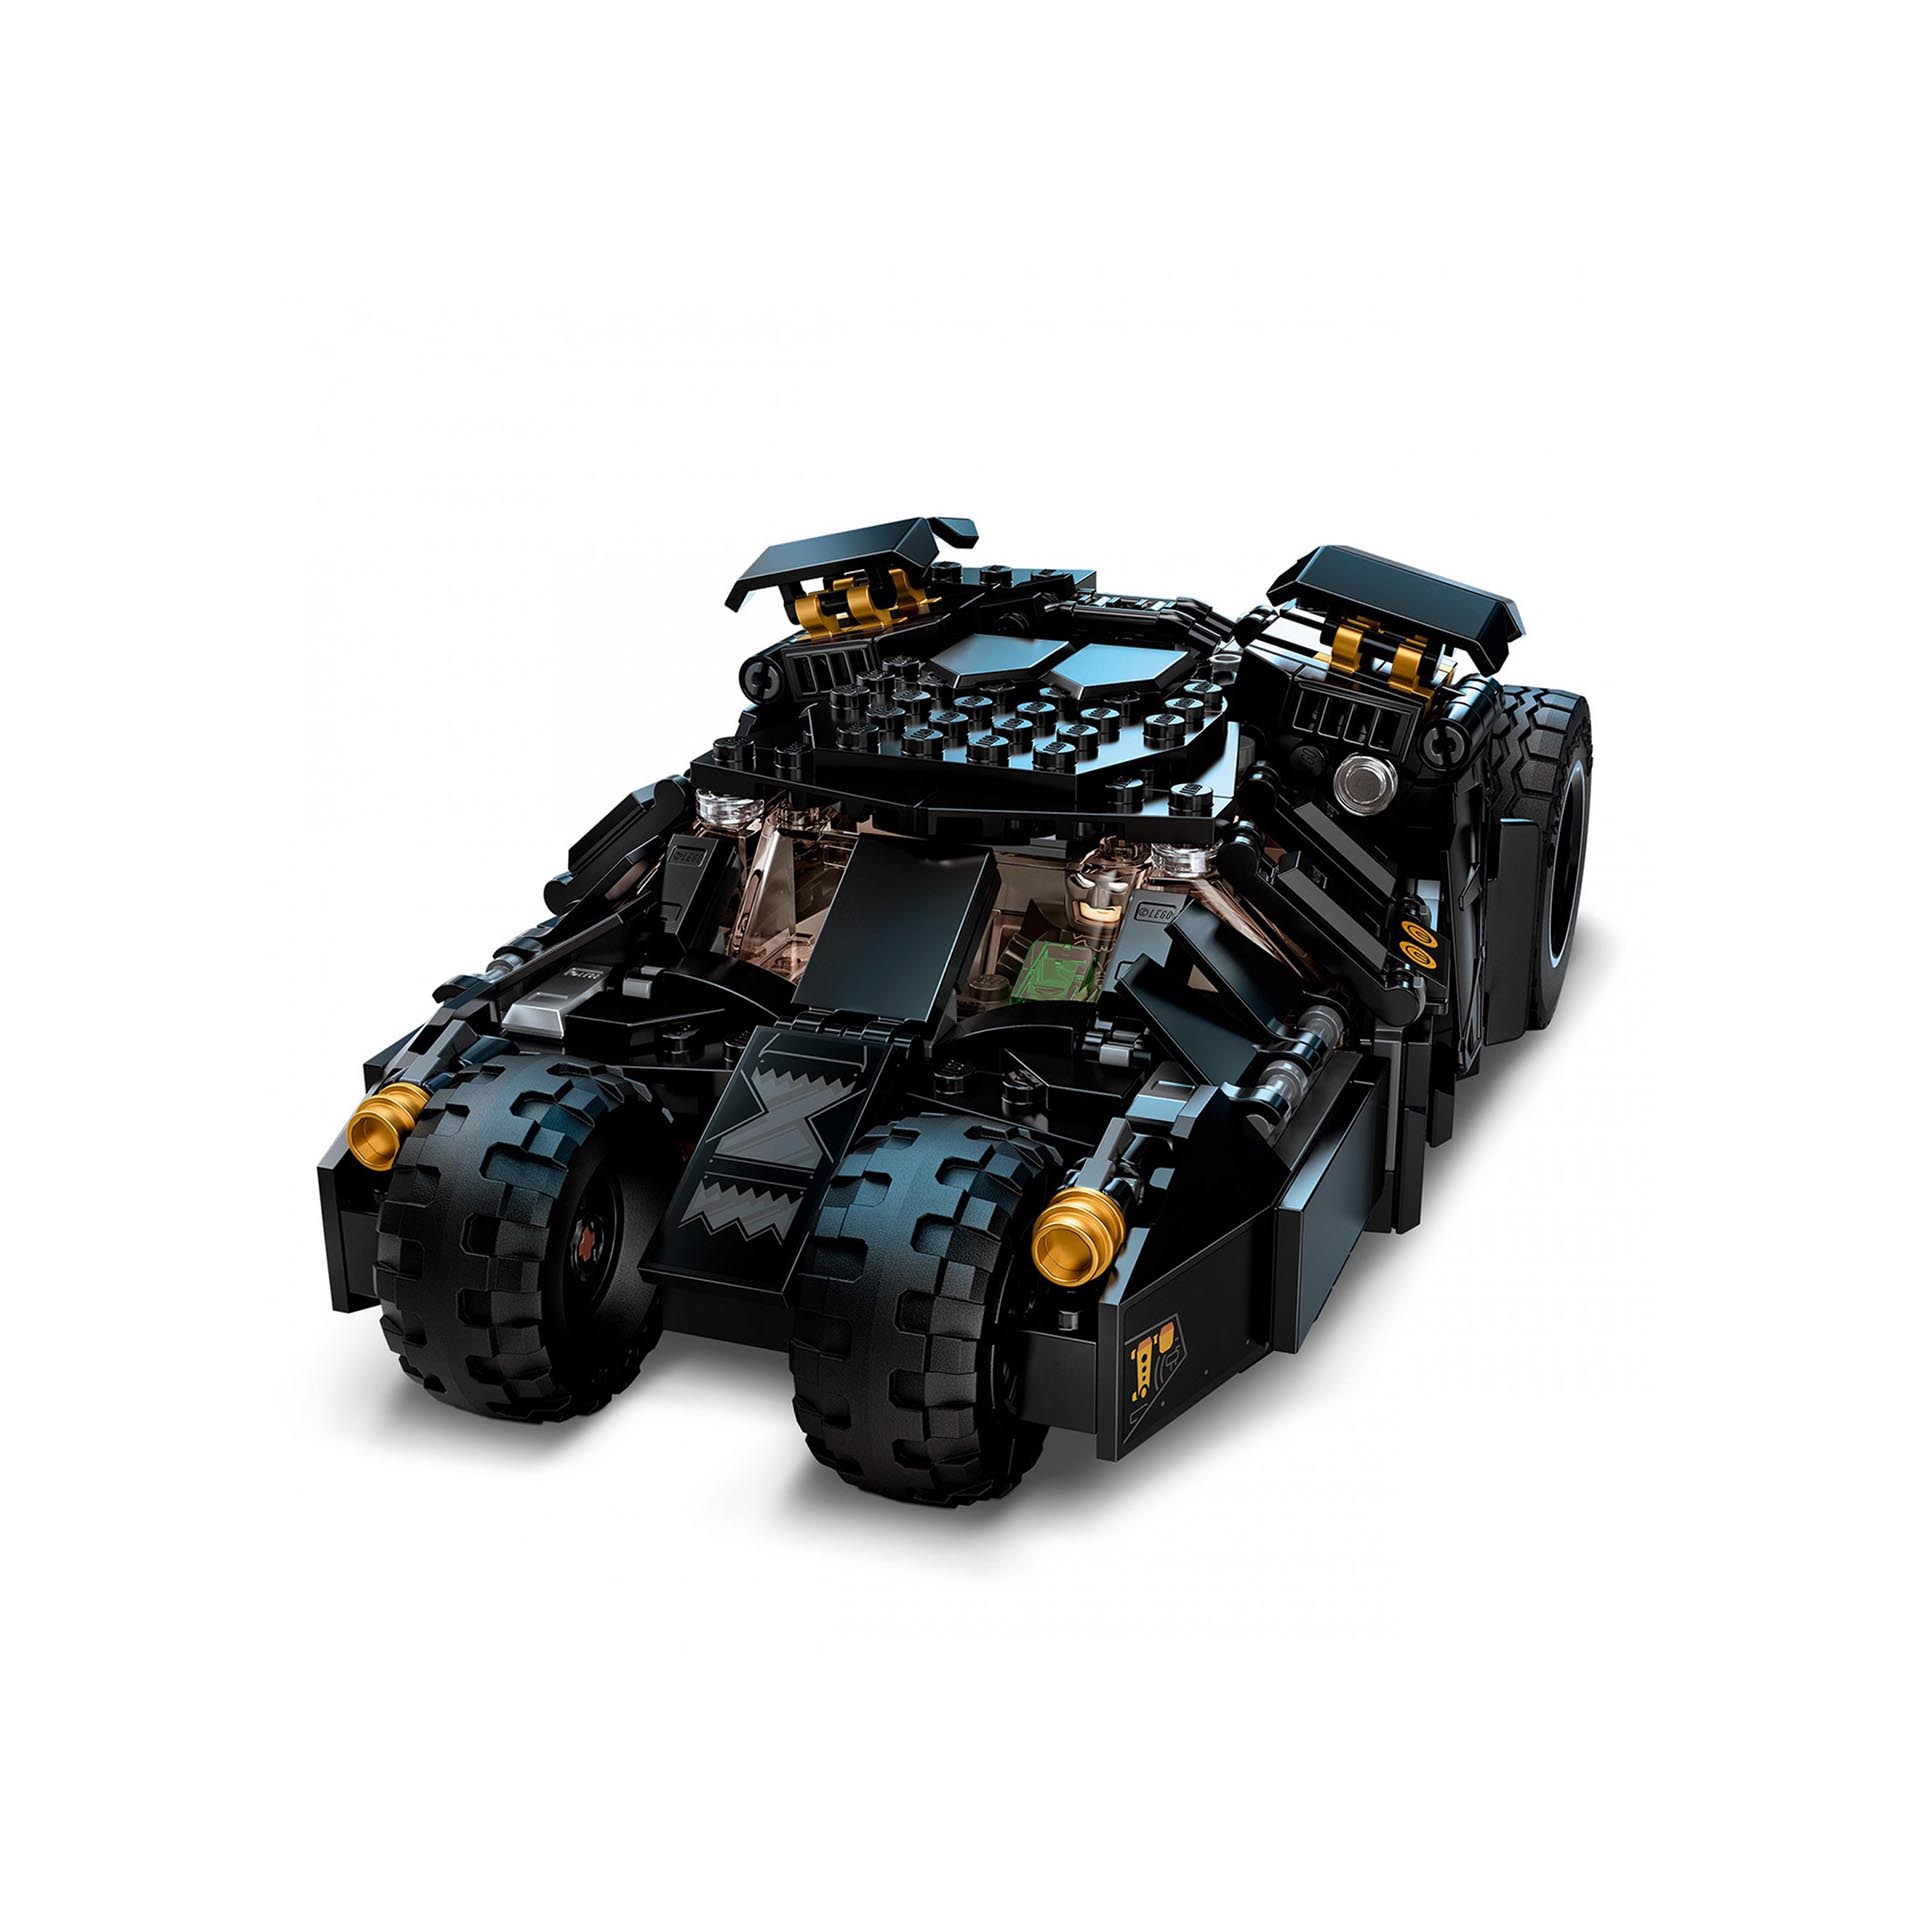 LEGO DC Batman Batmobile Tumbler: Resa Dei Conti Con Scarecrow, Macchina con Bat 76239, , large